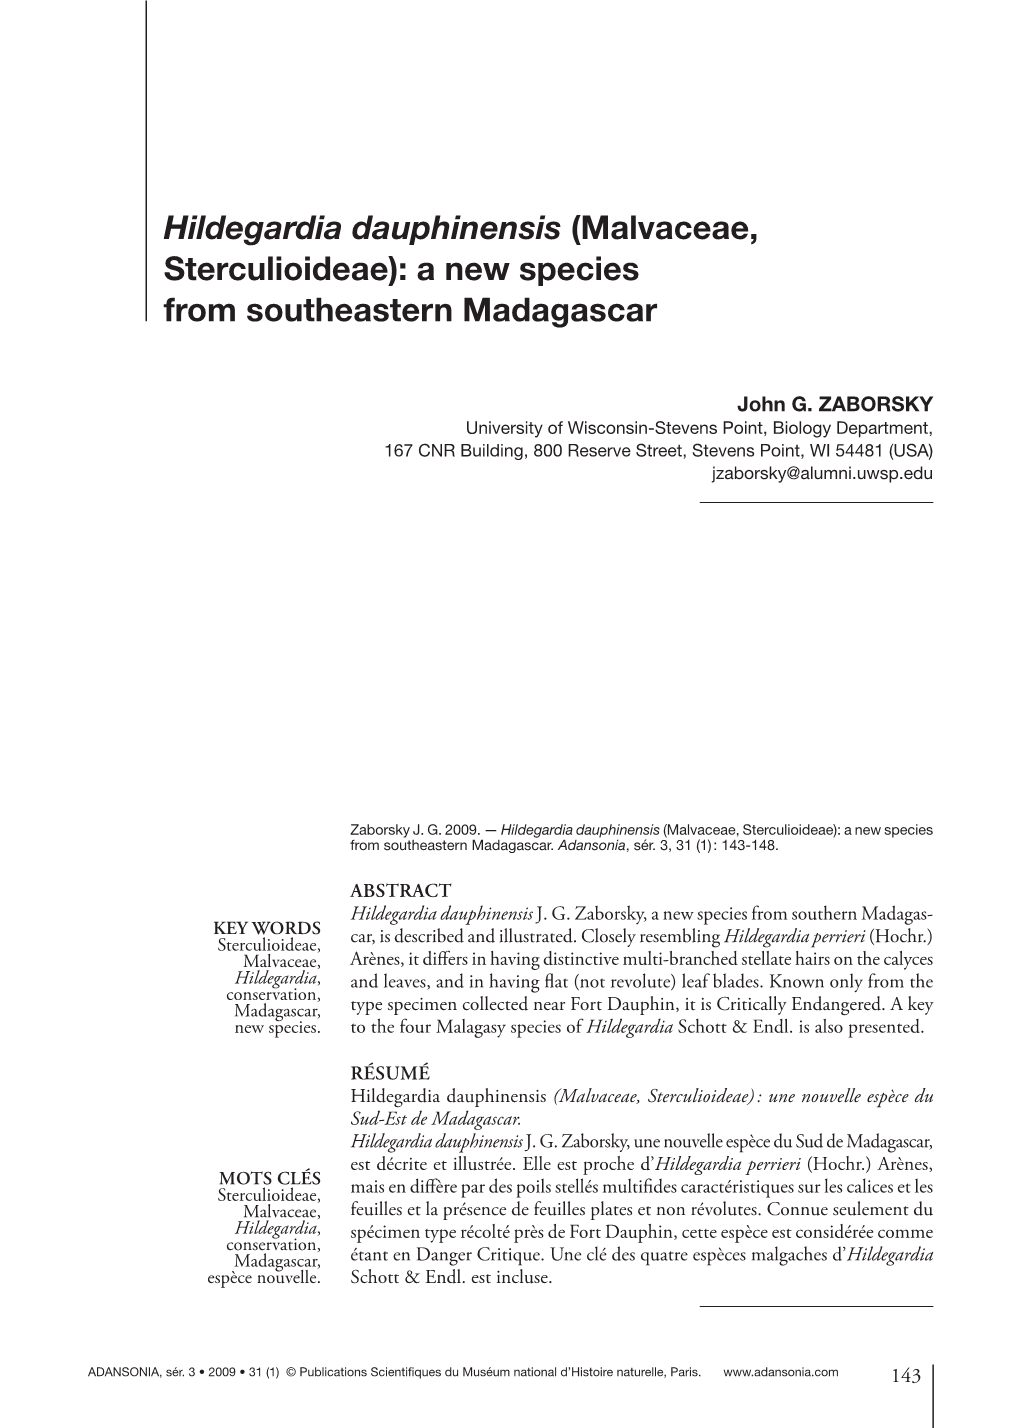 Hildegardia Dauphinensis (Malvaceae, Sterculioideae): a New Species from Southeastern Madagascar